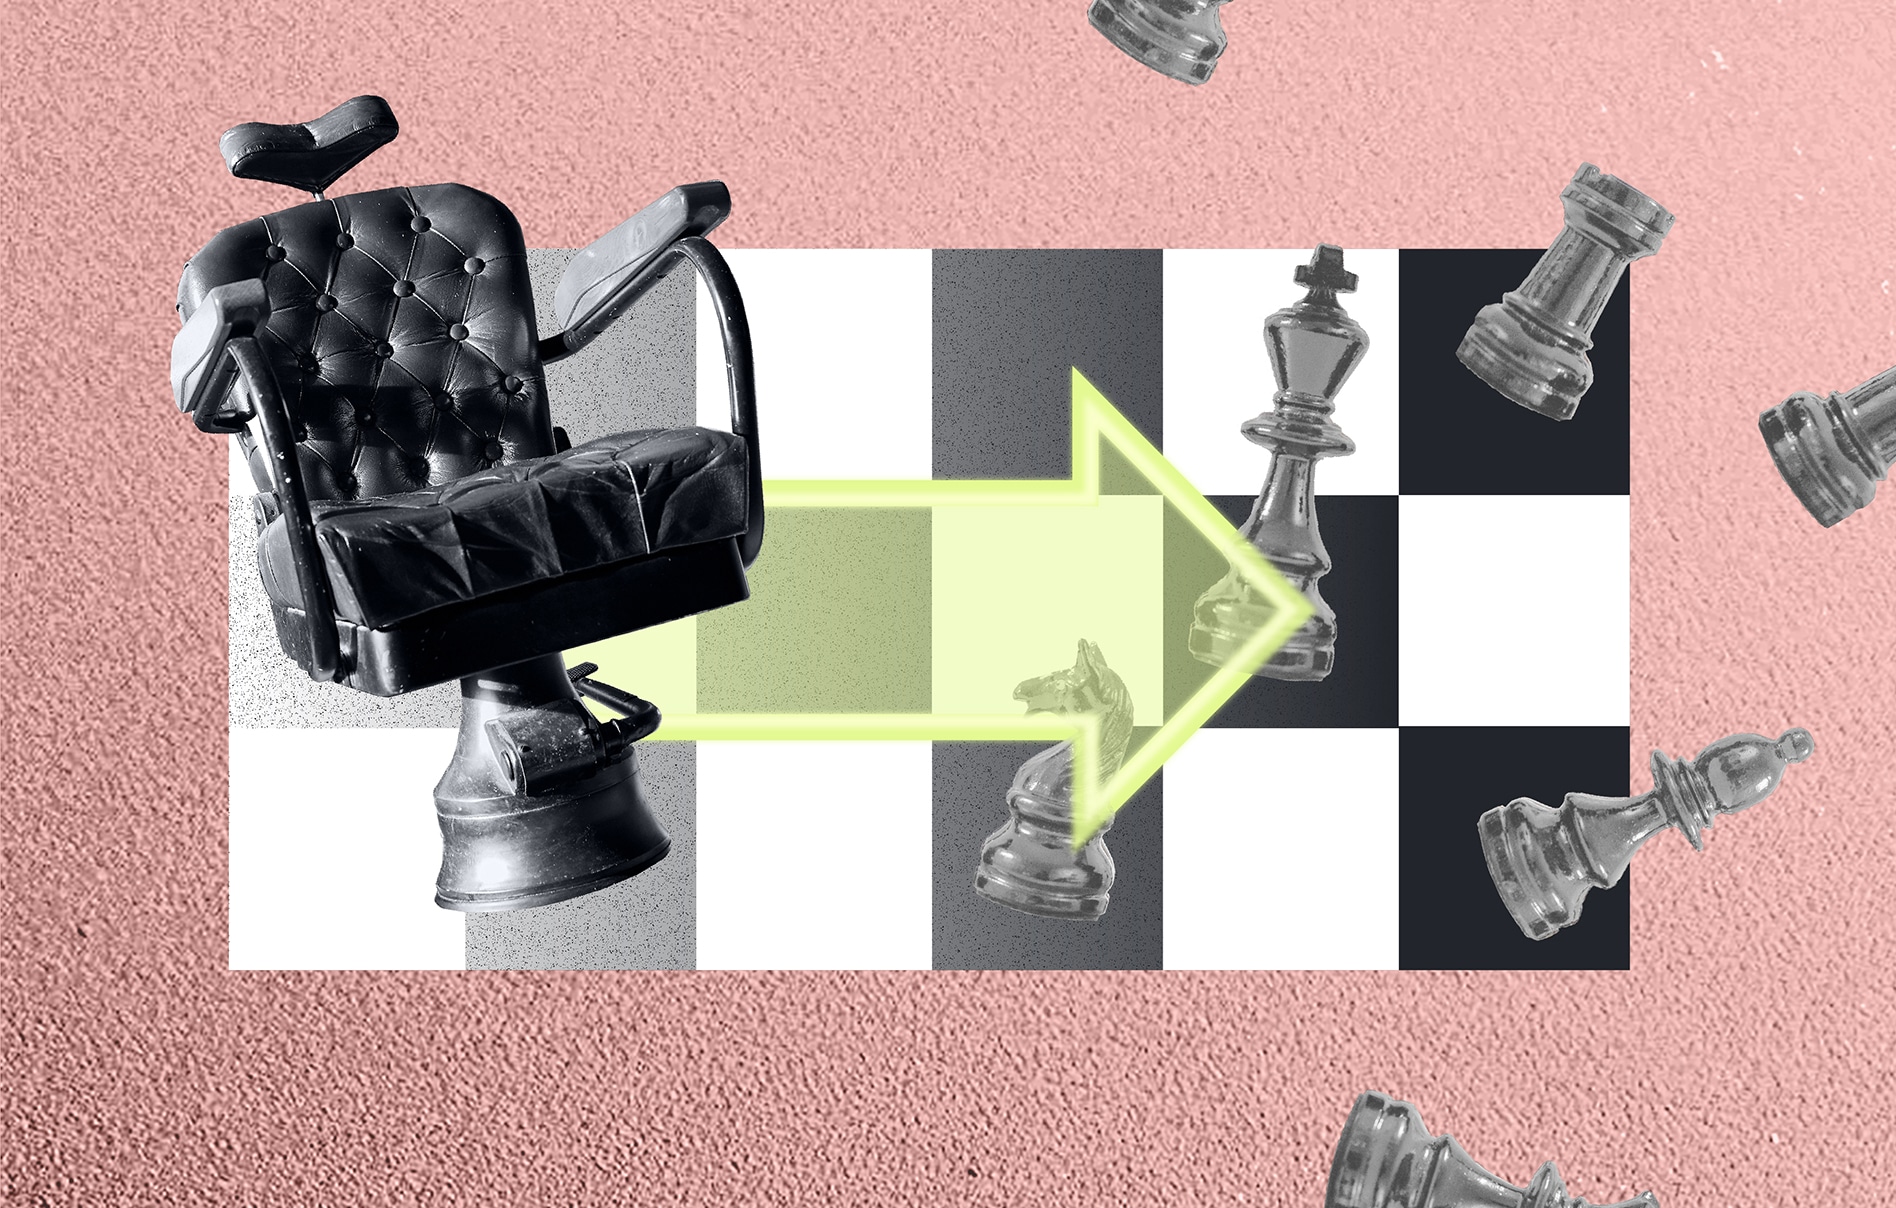 Salon chair moves across a chess board